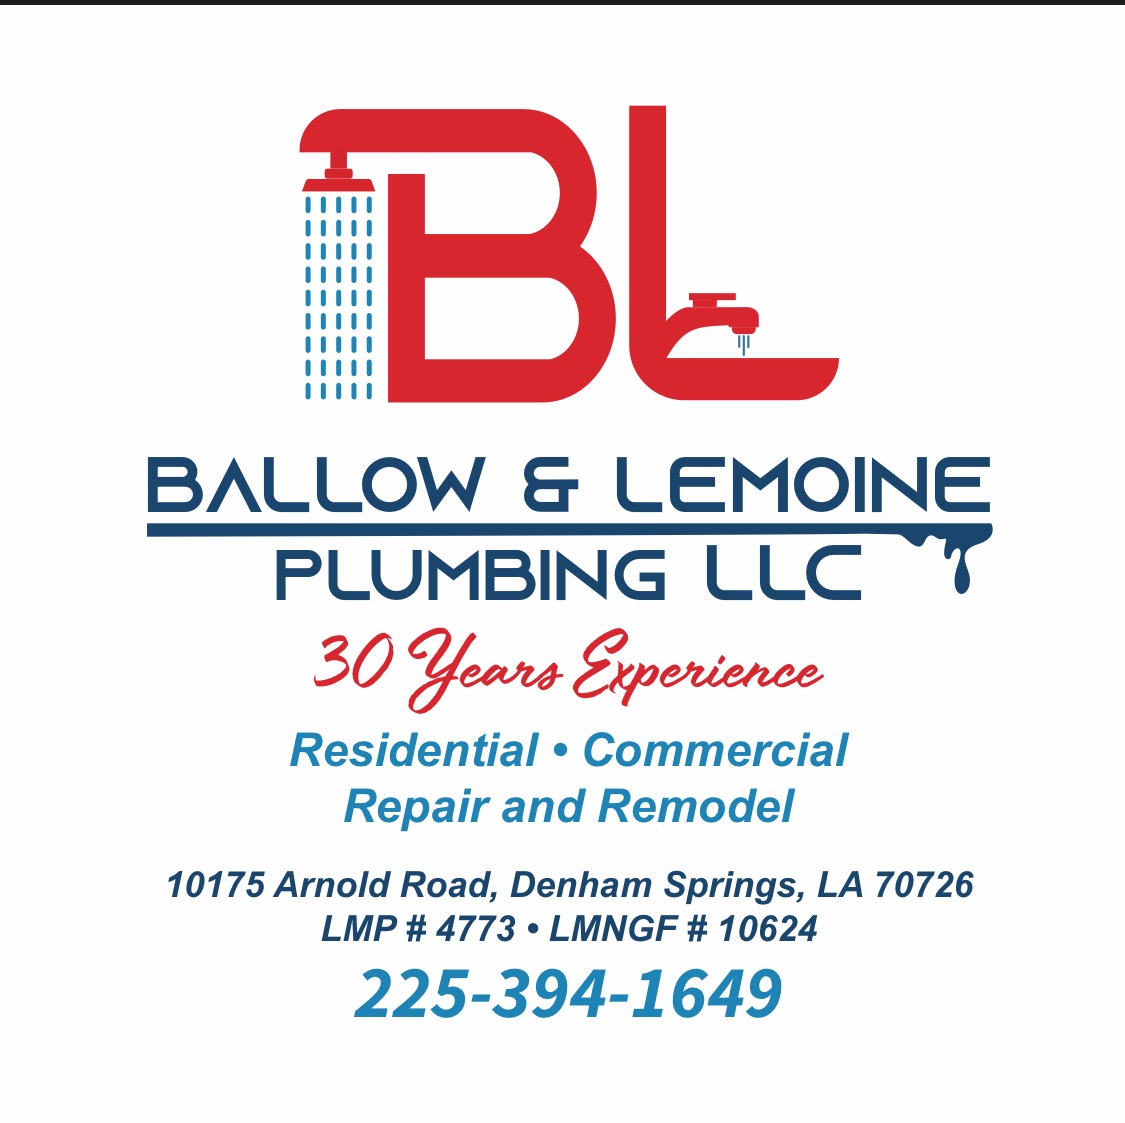 Ballow & Lemoine Plumbing, LLC Logo